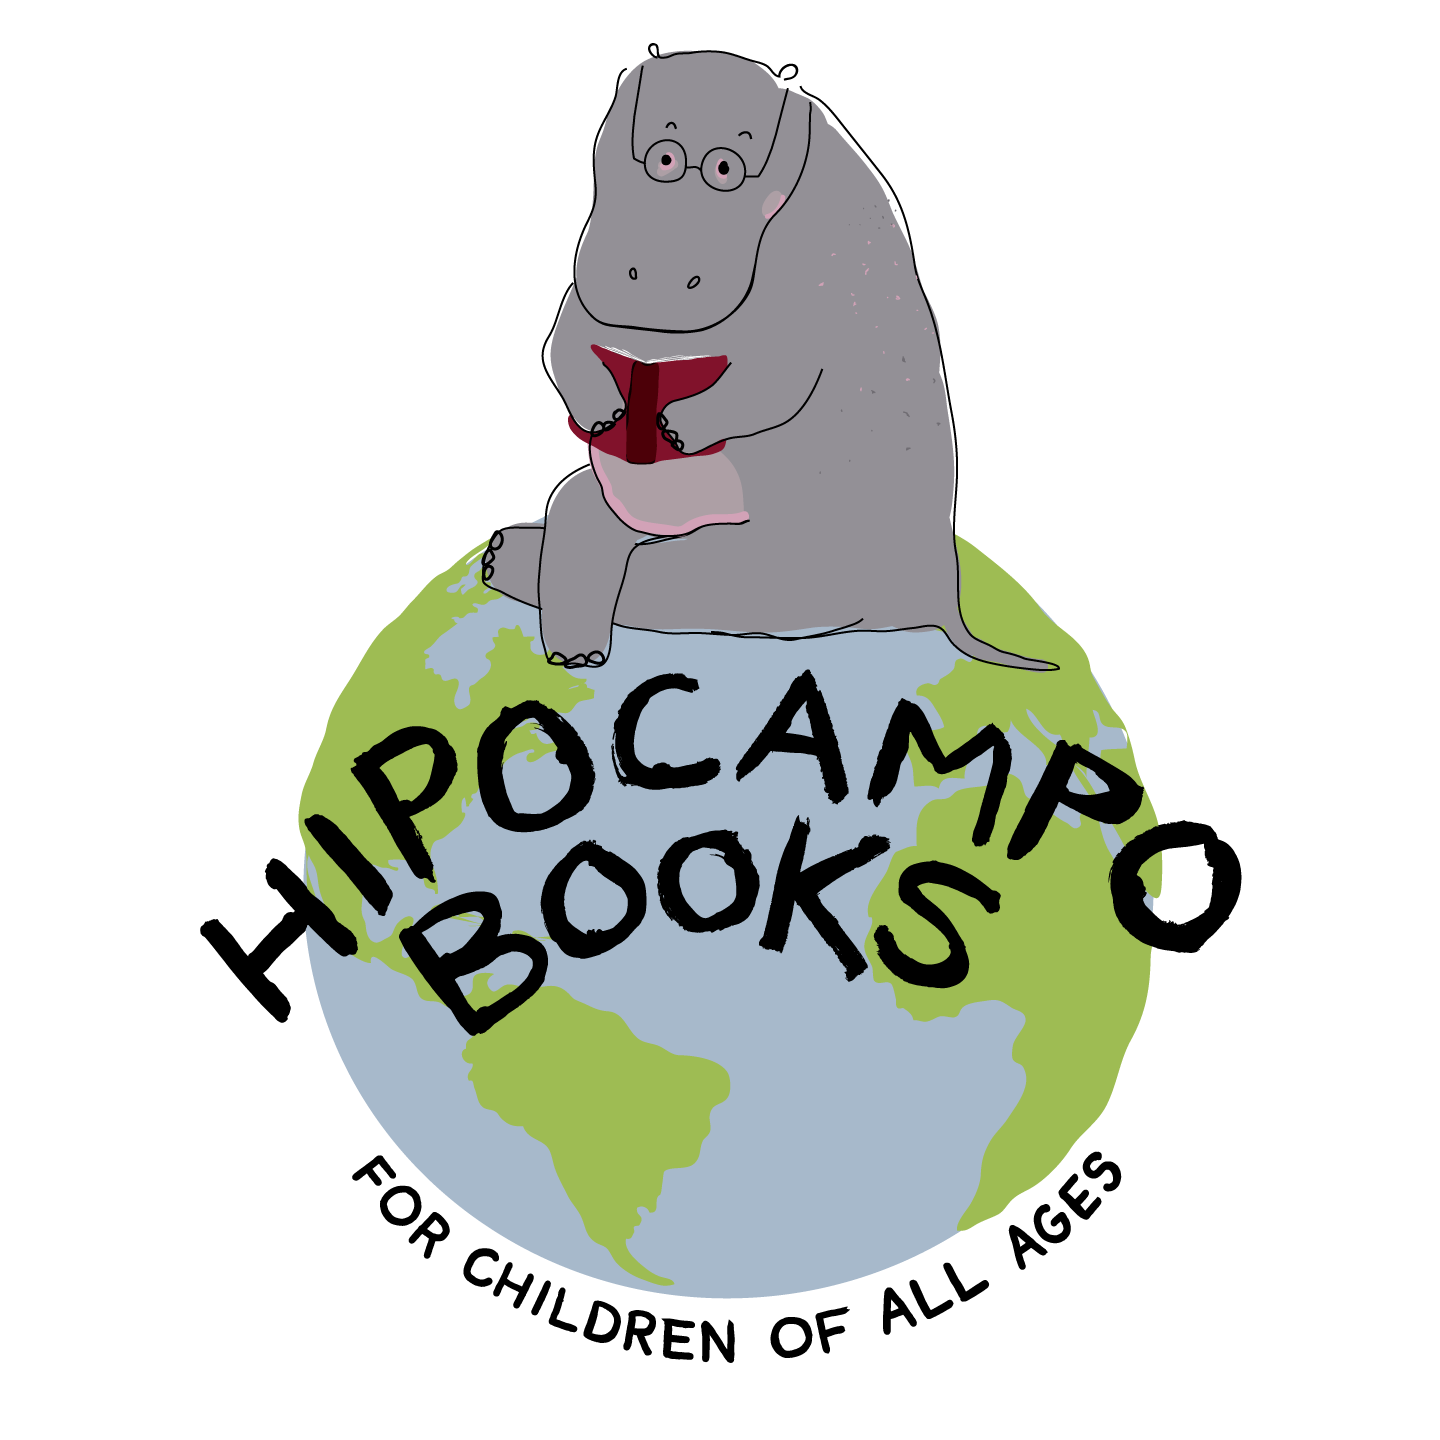 Hipocampo Children’s Books